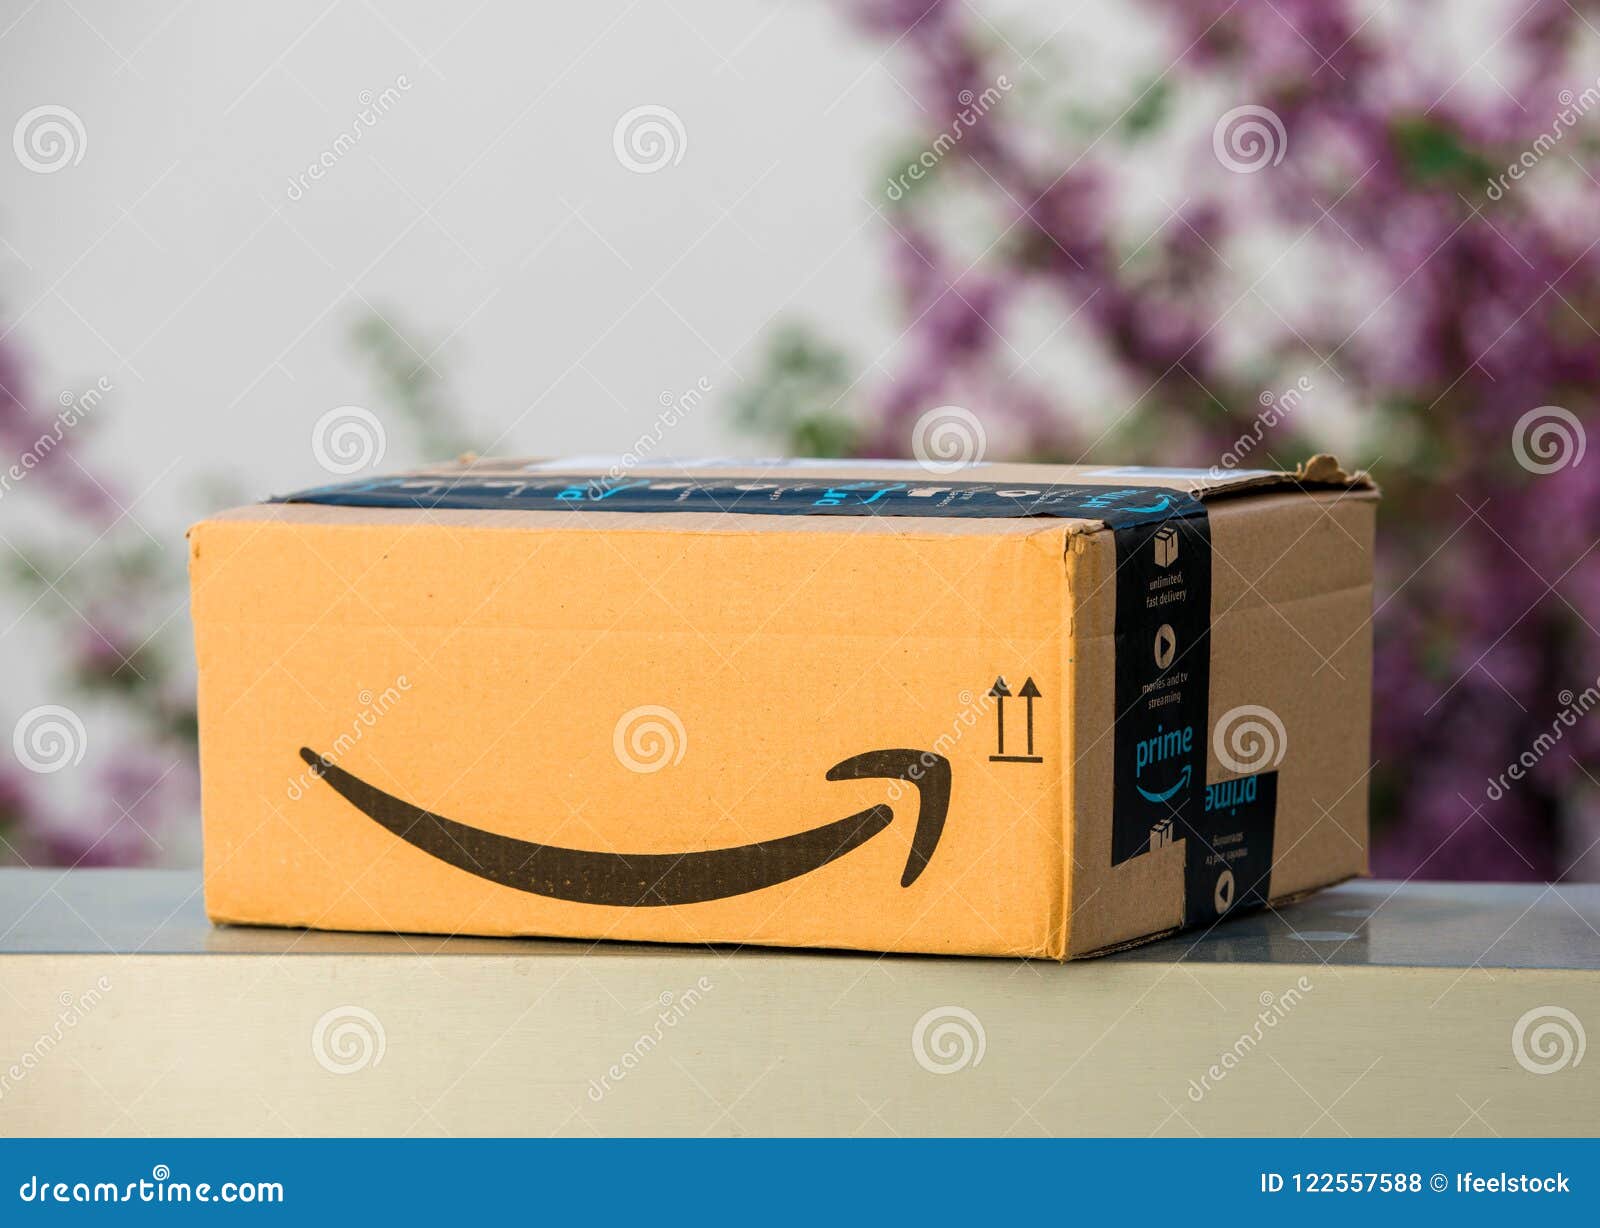 Amazon Delivery Man At Work Editorial Image | CartoonDealer.com #115366924